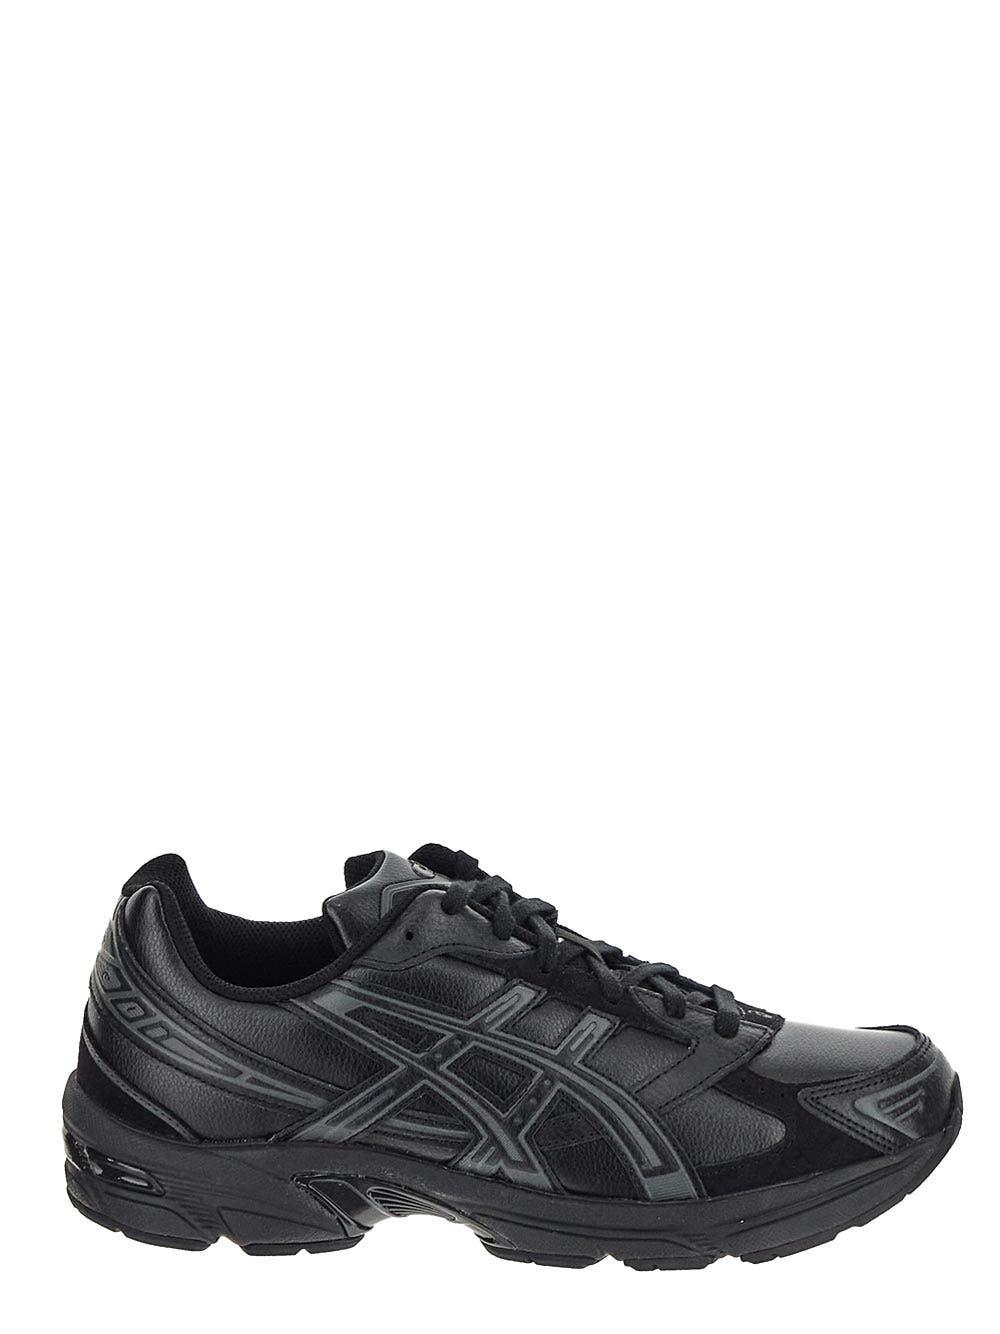 Asics Gel-1130 Sneakers / Dark Grey in Black for Men | Lyst